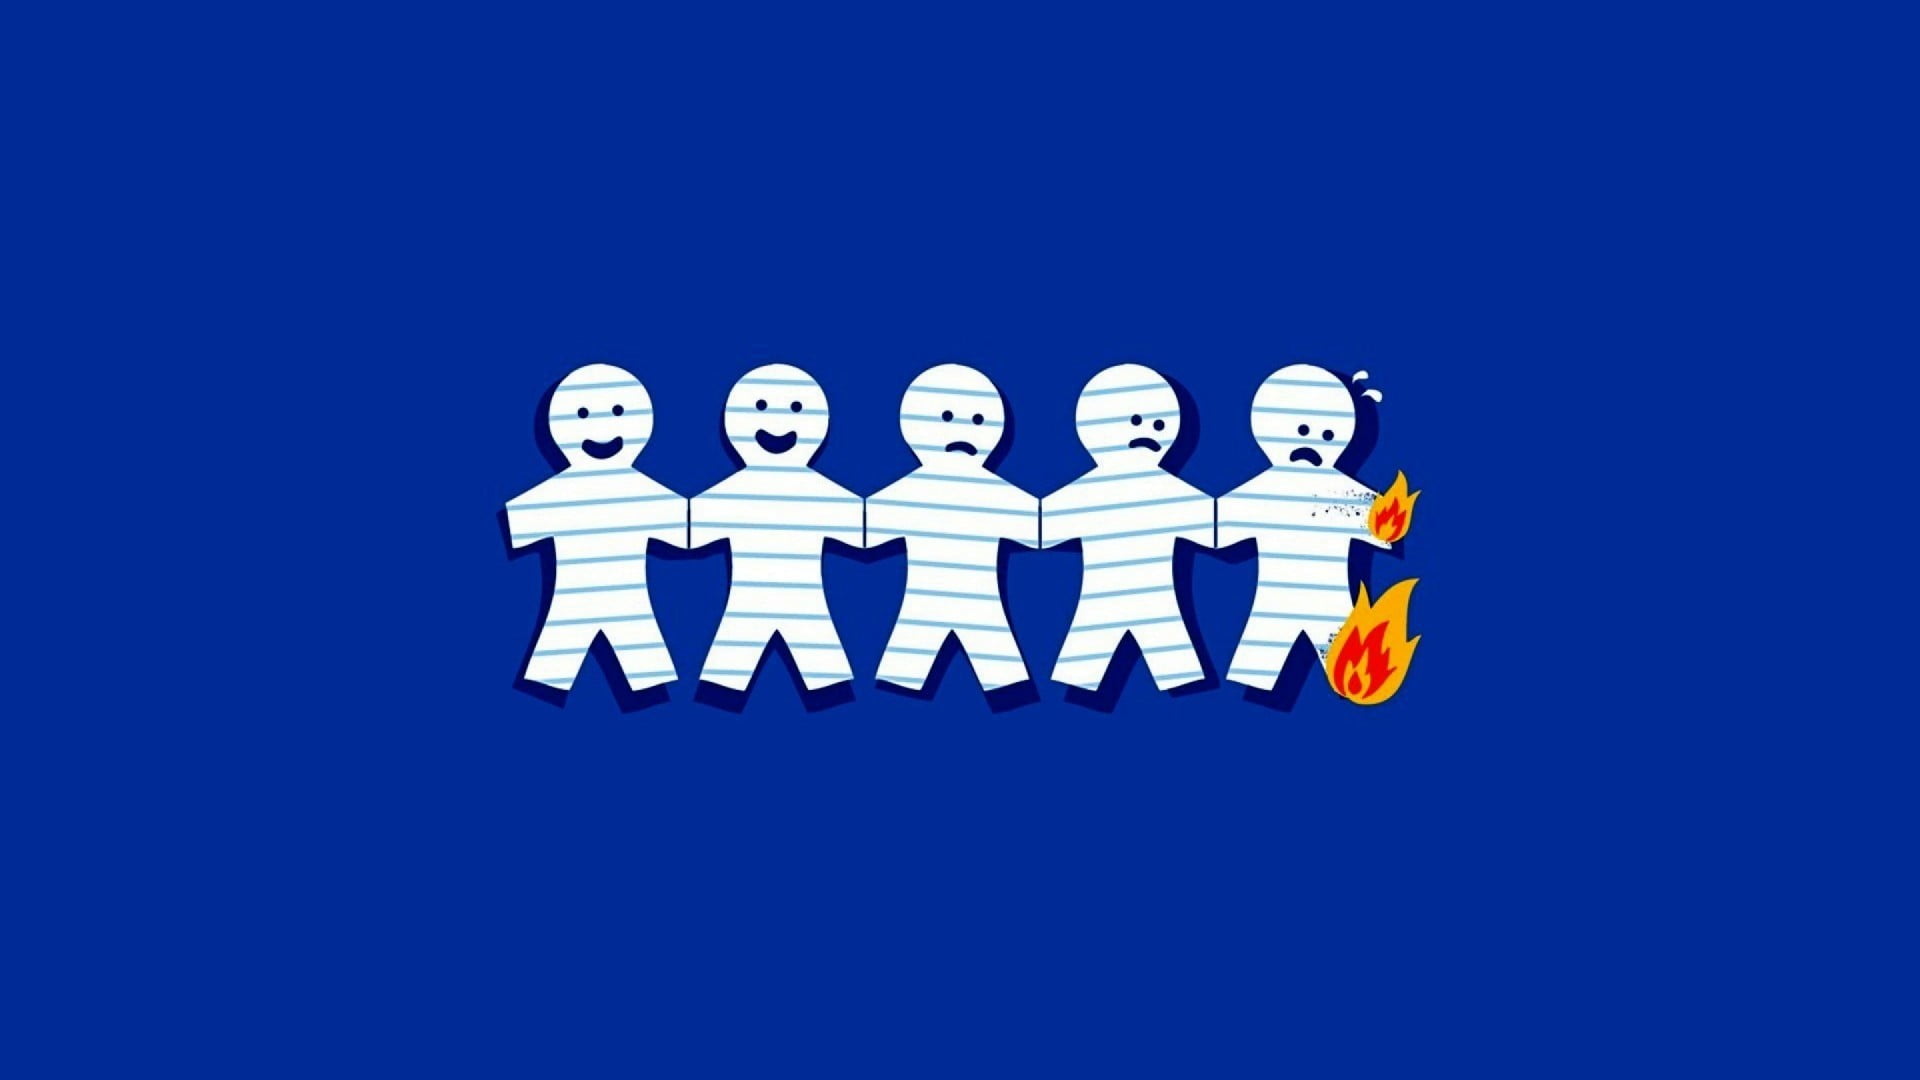 simple, humor, paper, burning, blue, men, copy space, blue background